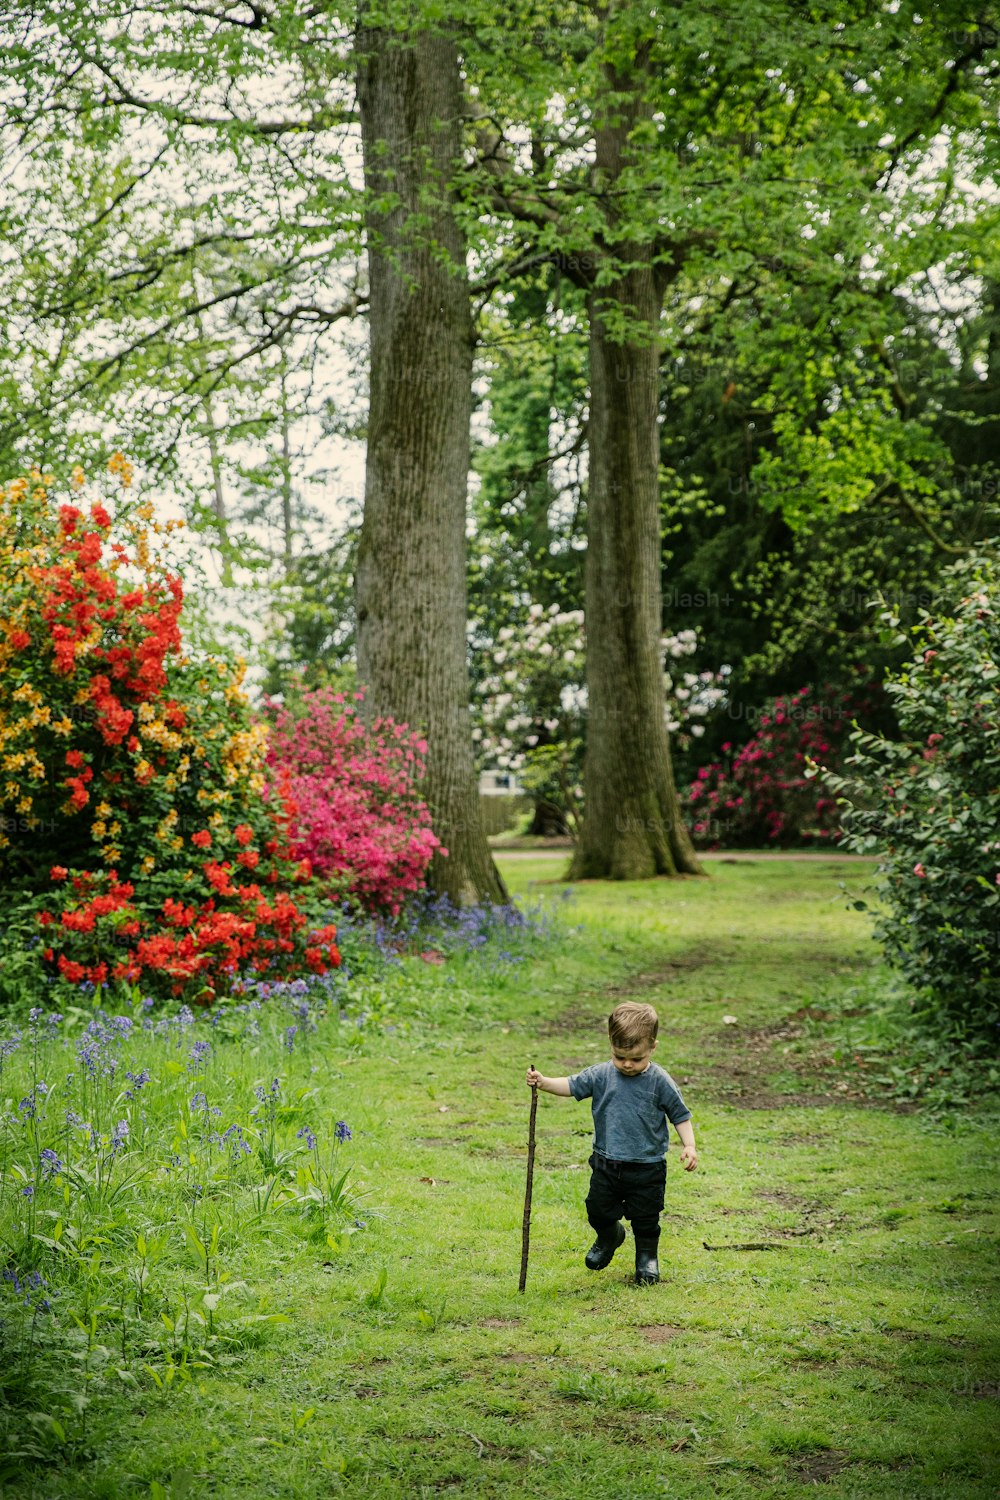 a young boy walking through a lush green park